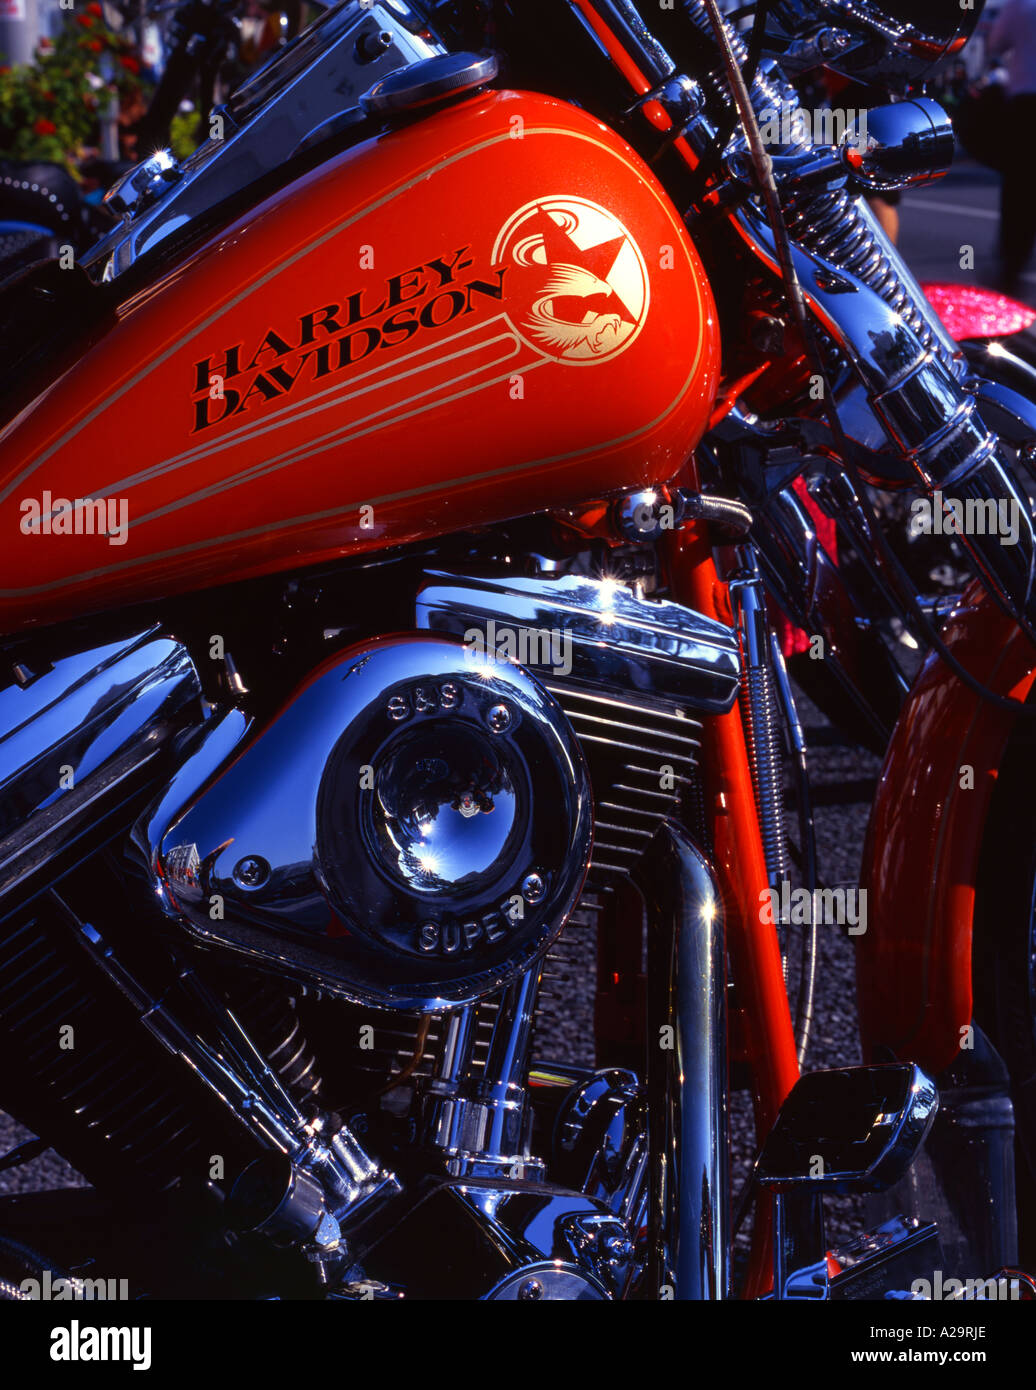 Harley Davidson Bike at Okinawa City Gate 2 Festival Stock Photo